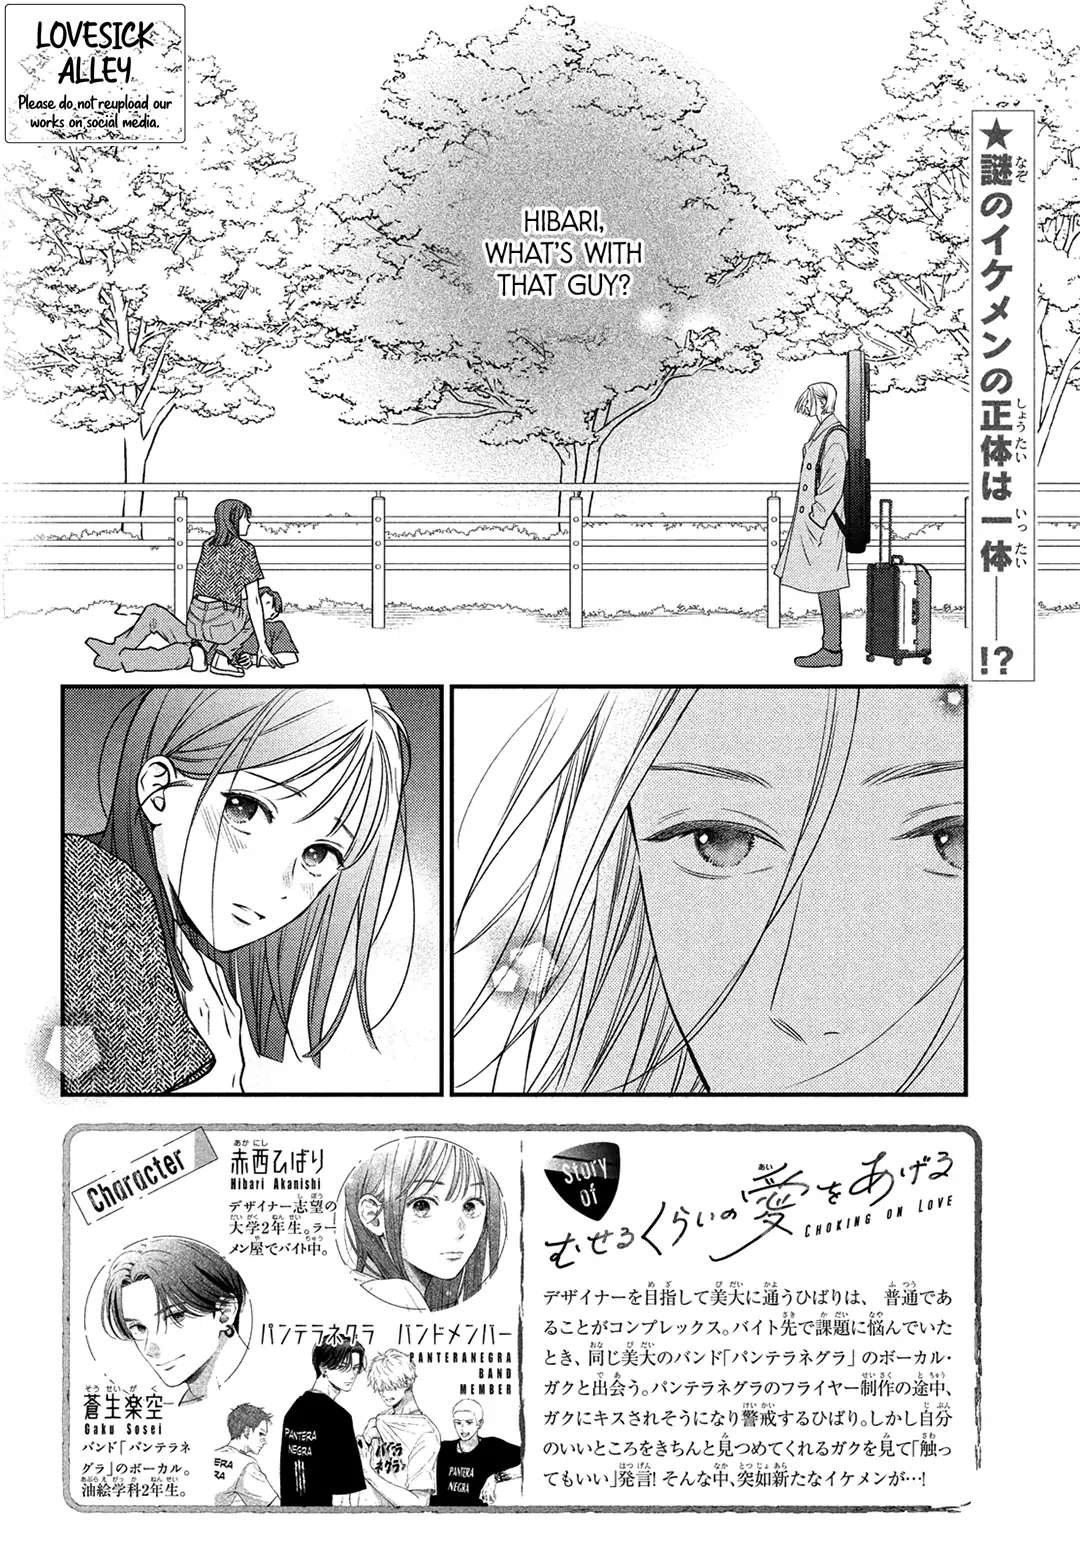 Museru Kurai No Ai Wo Ageru - 4 page 5-5ffd5dcd